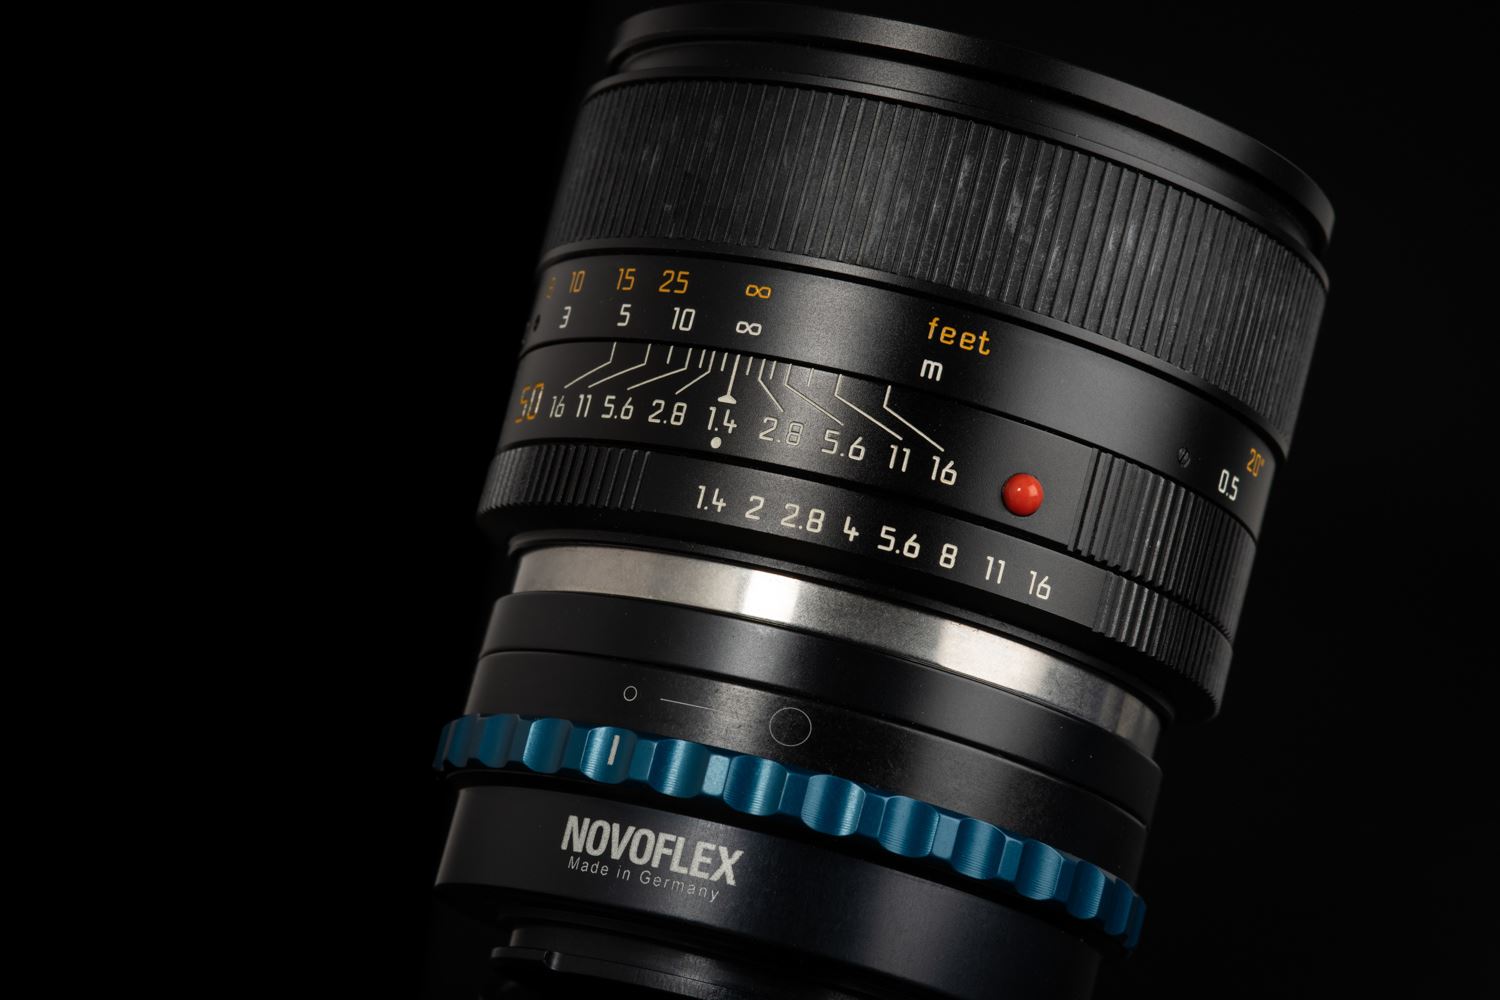 f22cameras | Leica Summilux-R 50mm f/1.4 E60 Modified to Sony A 